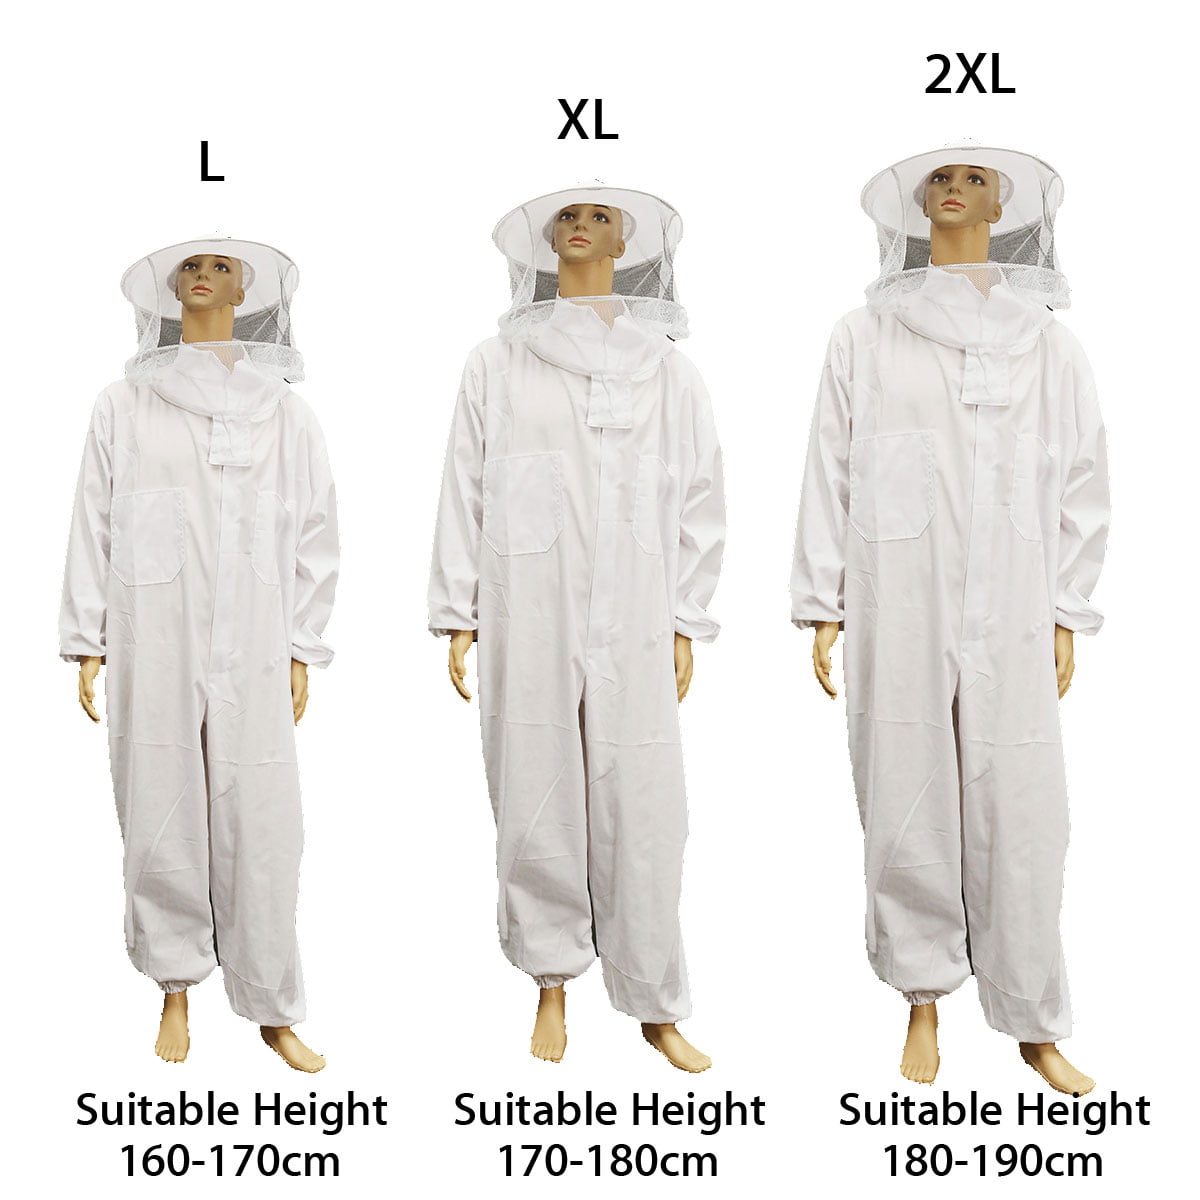 2XL Beekeepers Basic White Round Tunic Size 